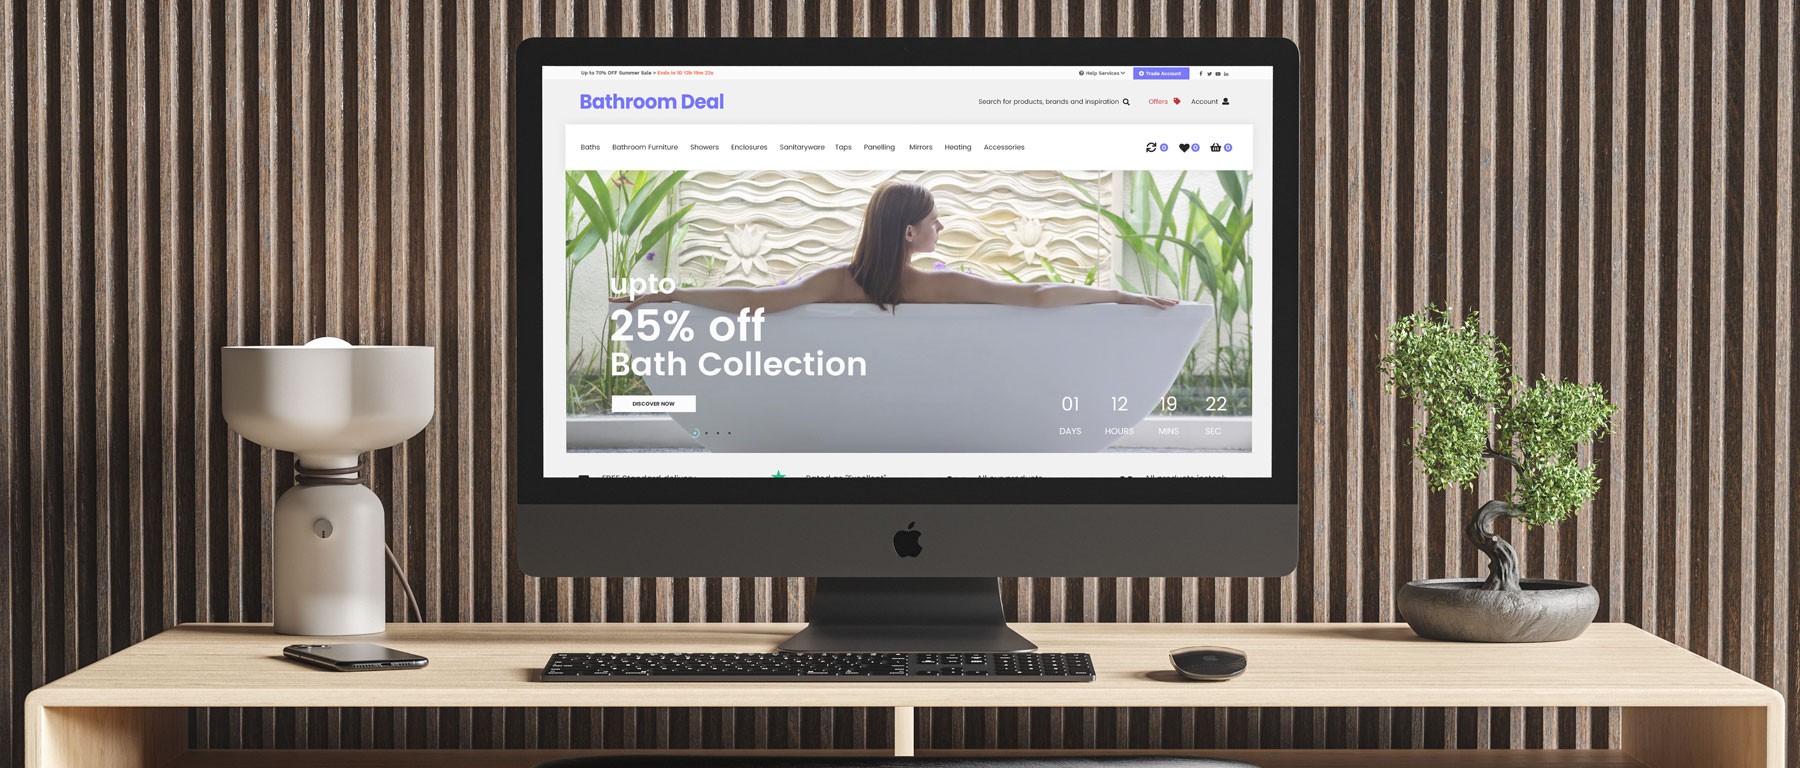 New Website, New Look for Bathroom Deal